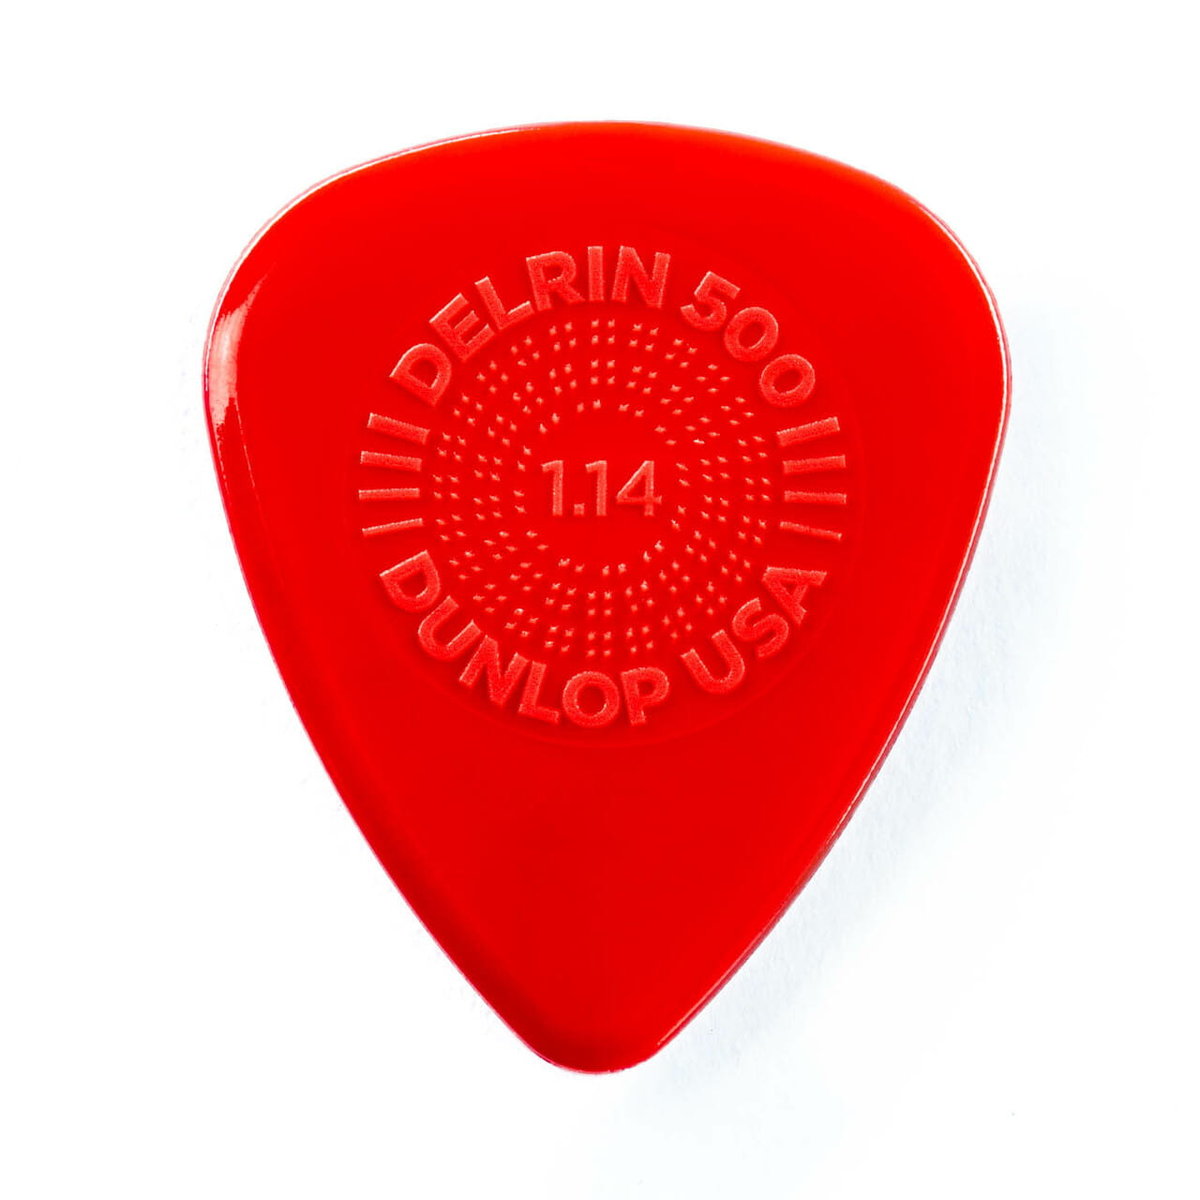 Dunlop Delrin Prime Grip 1,14 kostka gitarowa